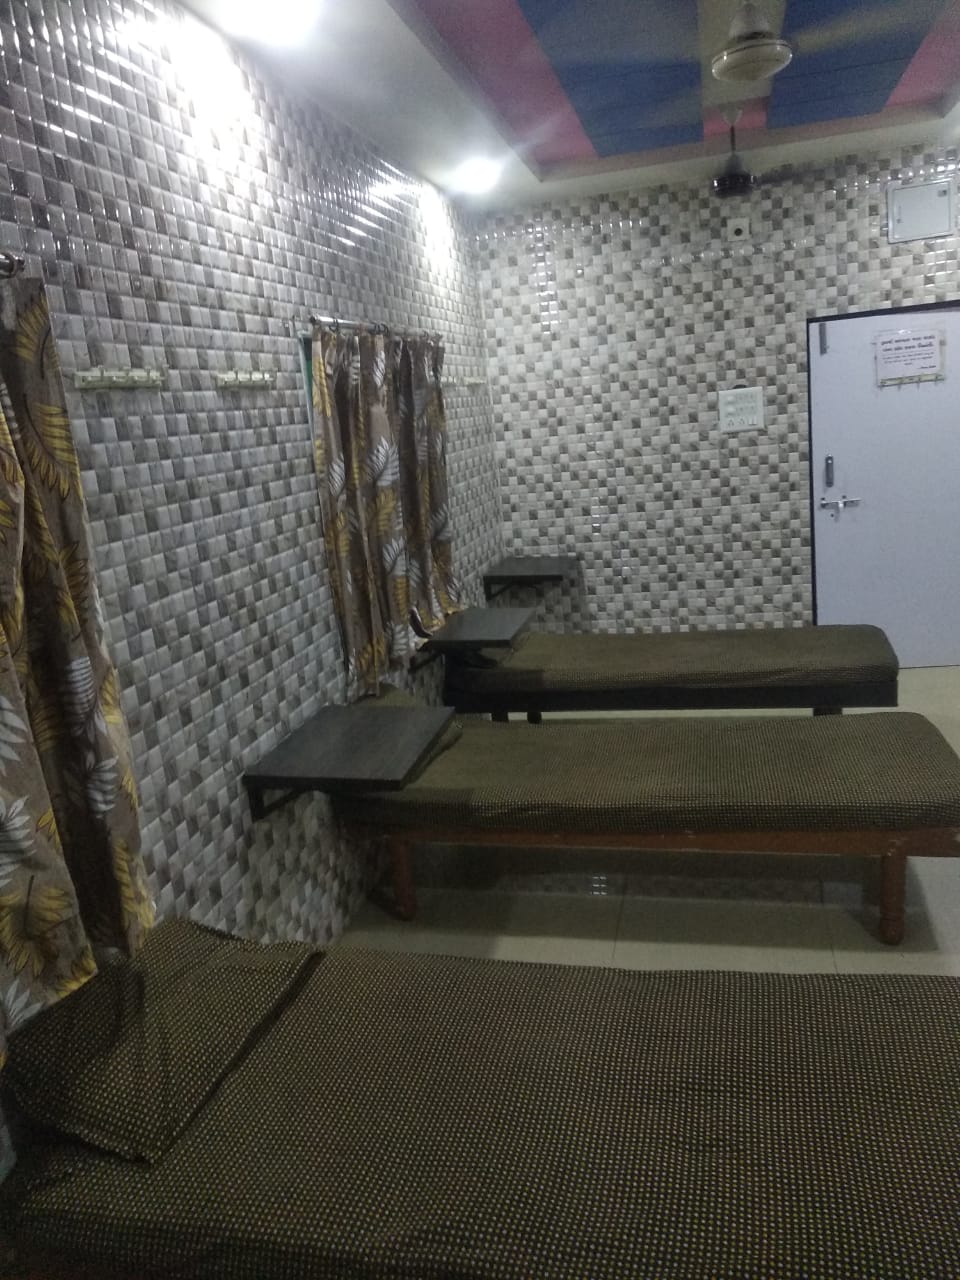 Hostel for Students in Rajkot